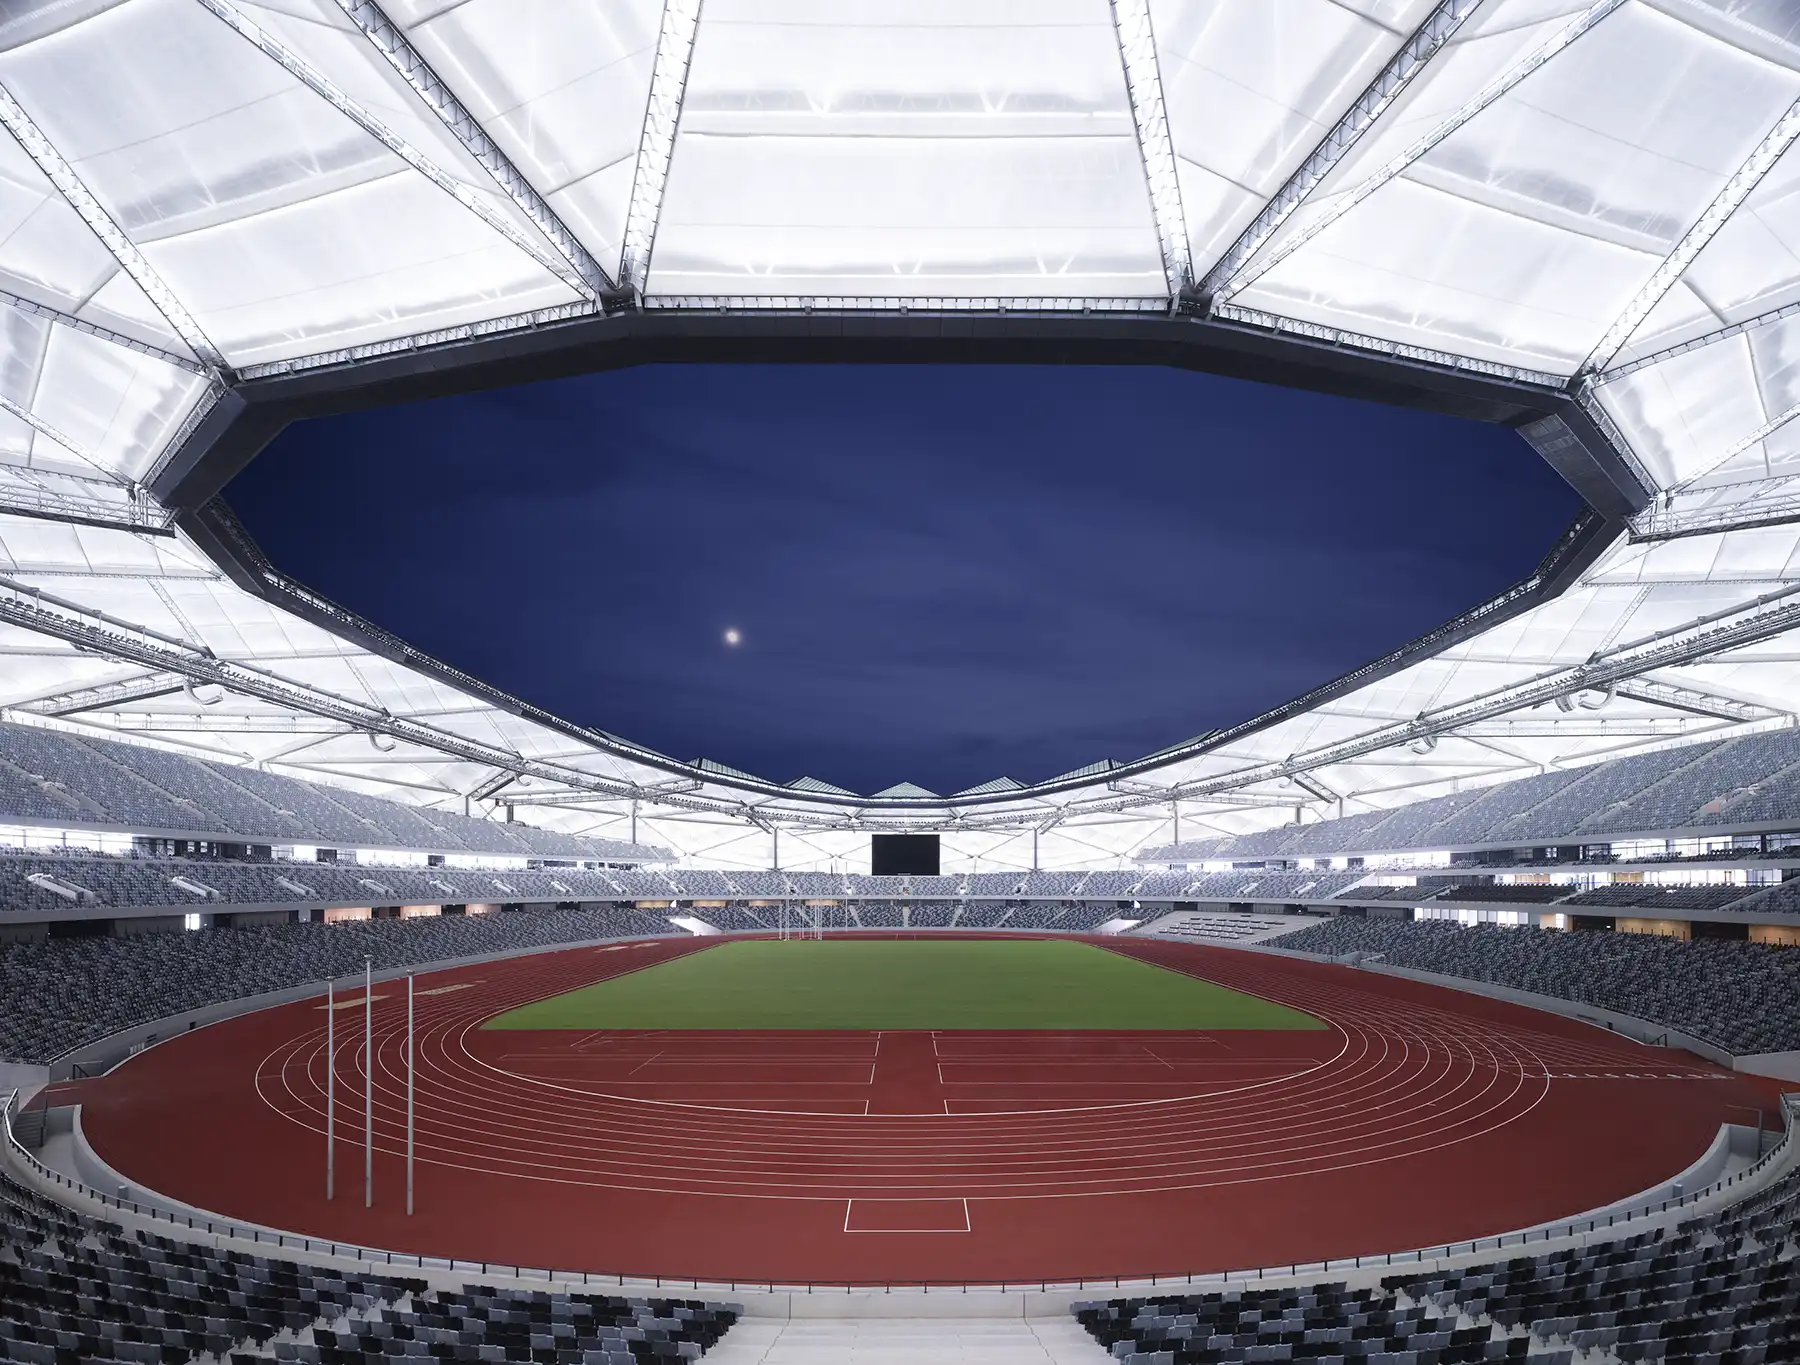 01_Conceptlicht.com_Universiade-Sports-Center-Shenzhen